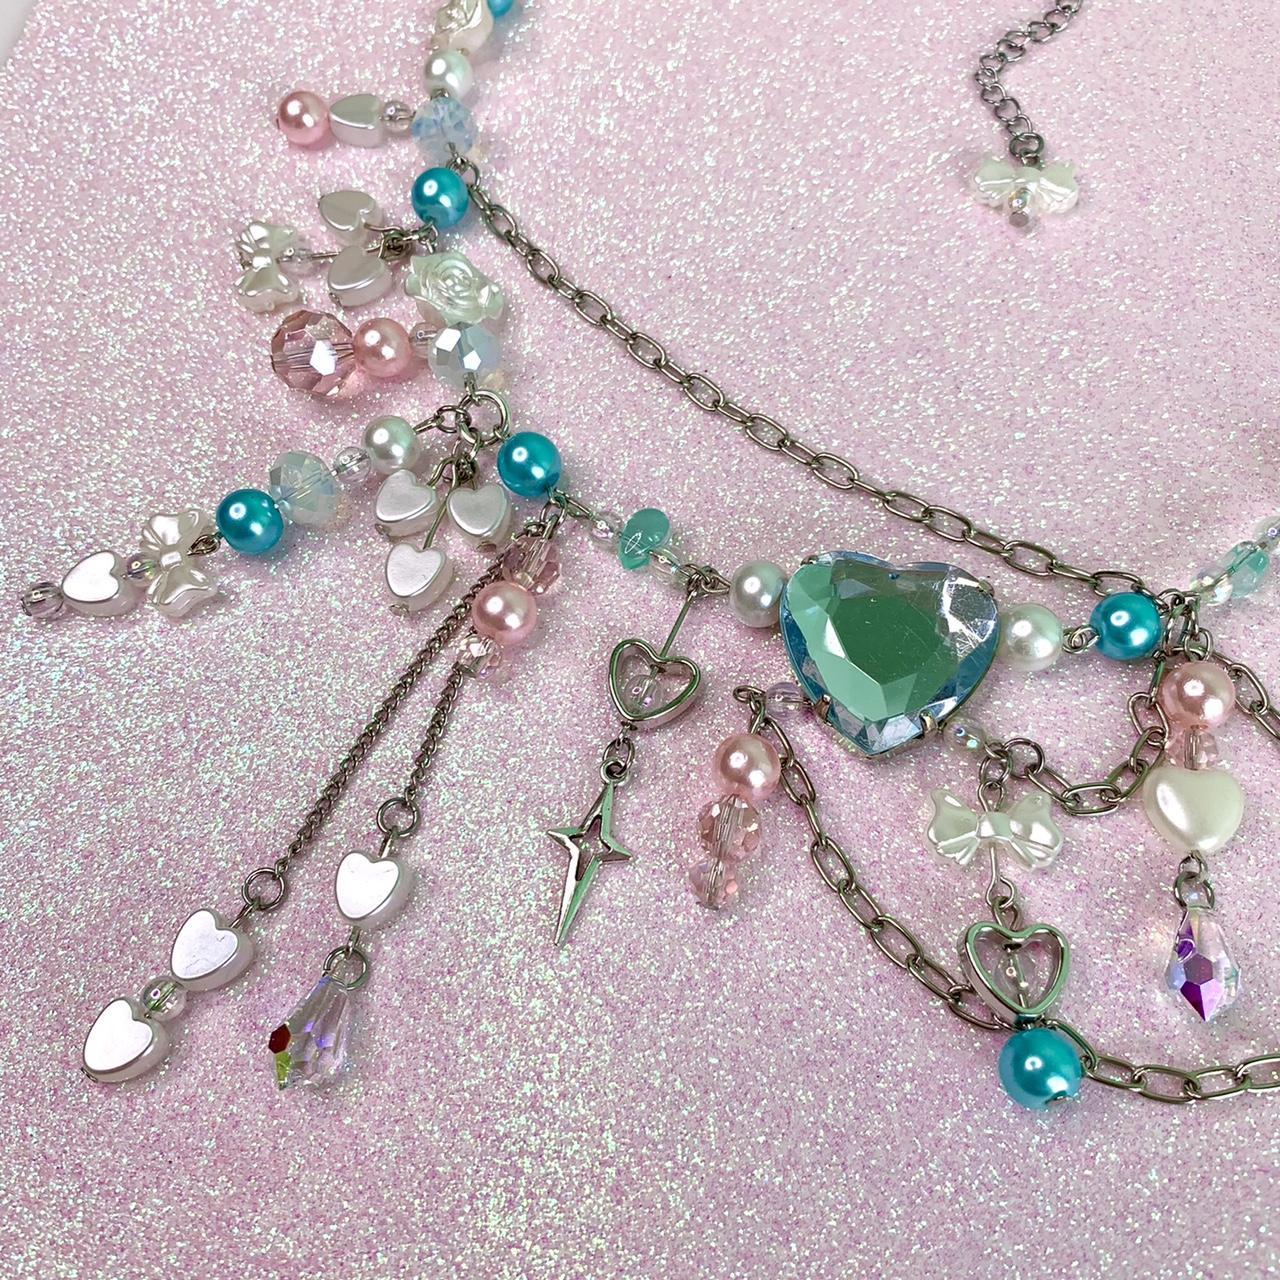 Sugarpill Women's Pink and Blue Jewellery (3)